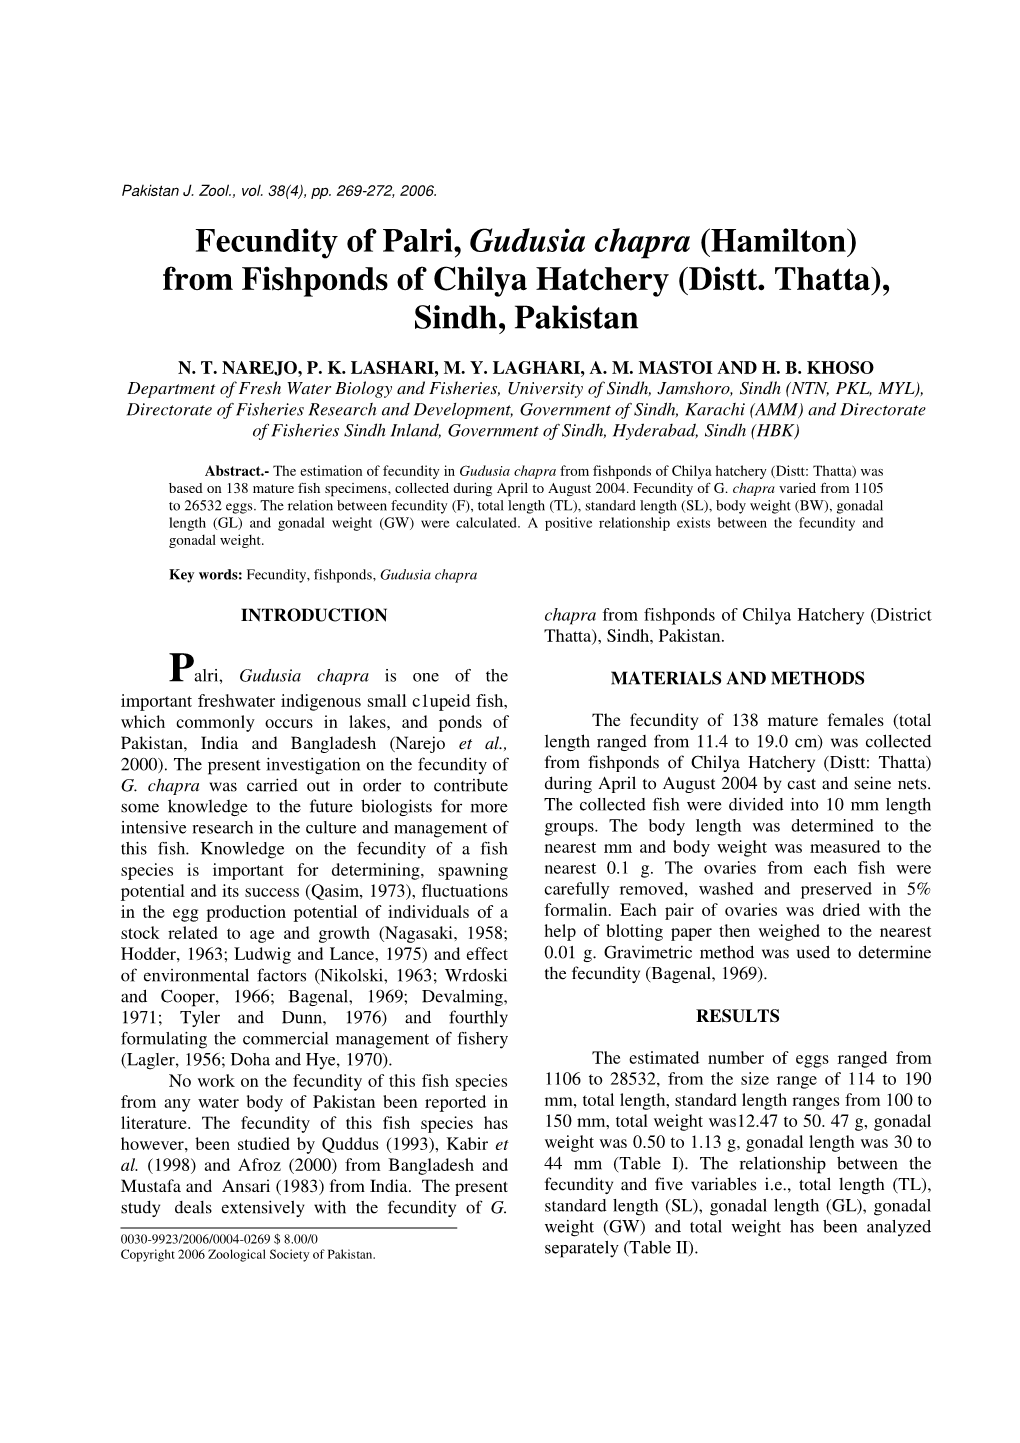 Fecundity of Palri, Gudusia Chapra (Hamilton) from Fishponds of Chilya Hatchery (Distt